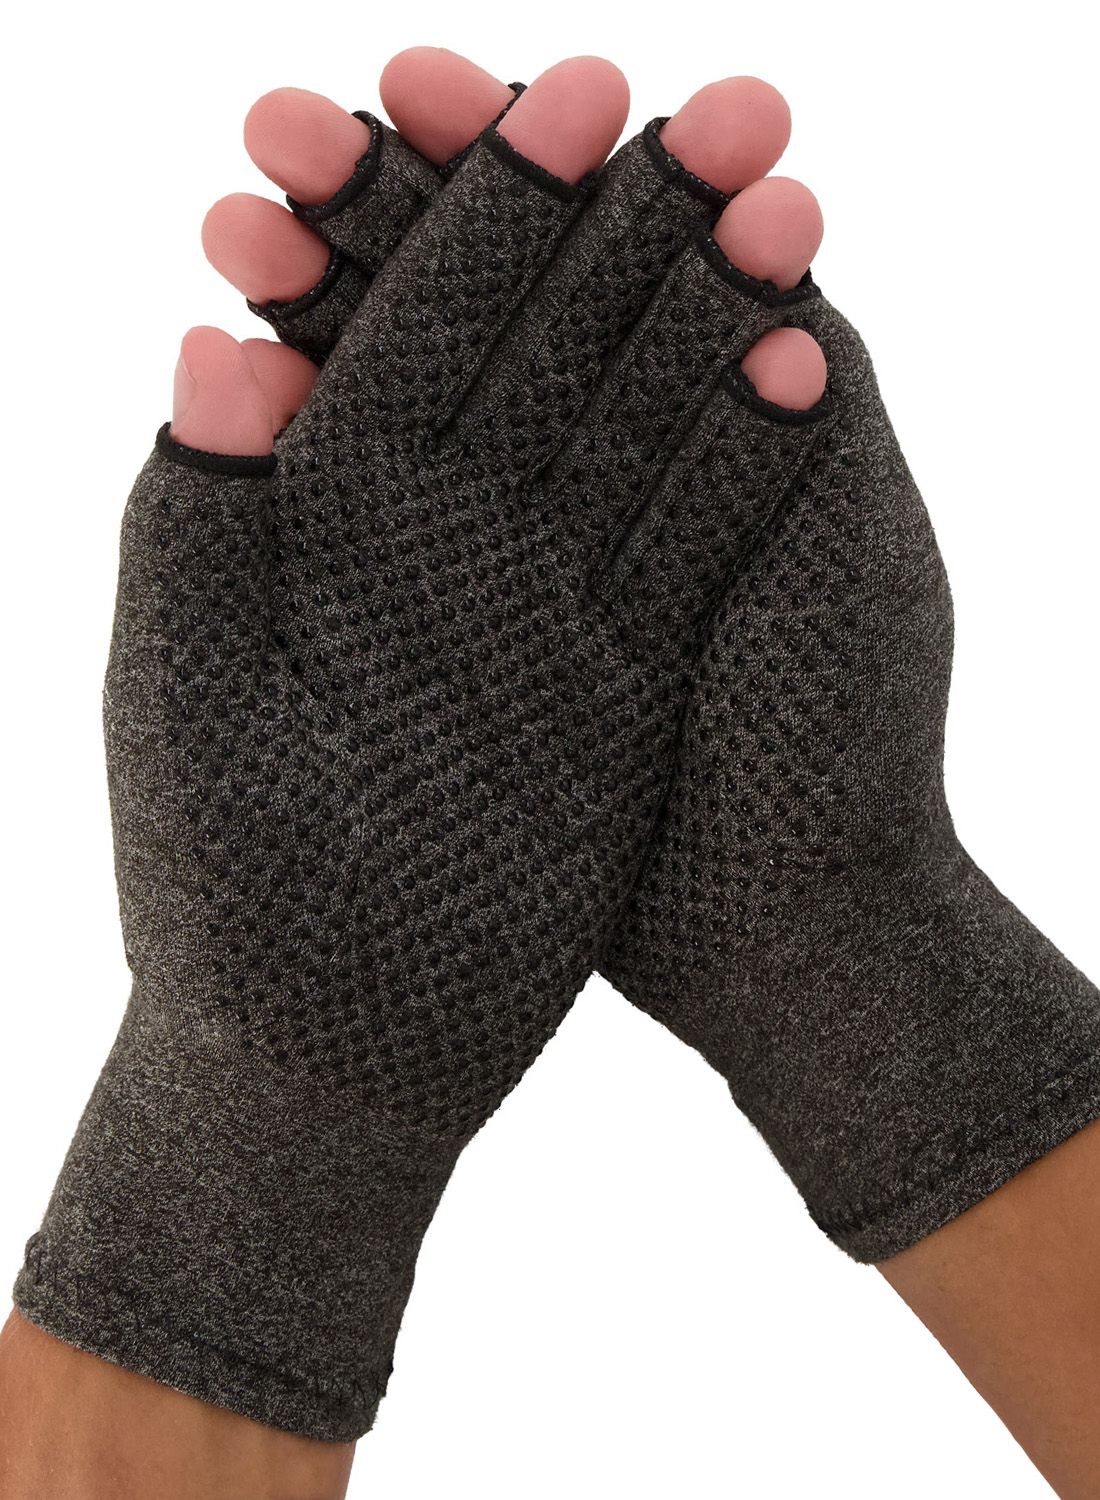 medidu rheumatoid arthritis osteoarthritis gloves with anti-slip layer for sale